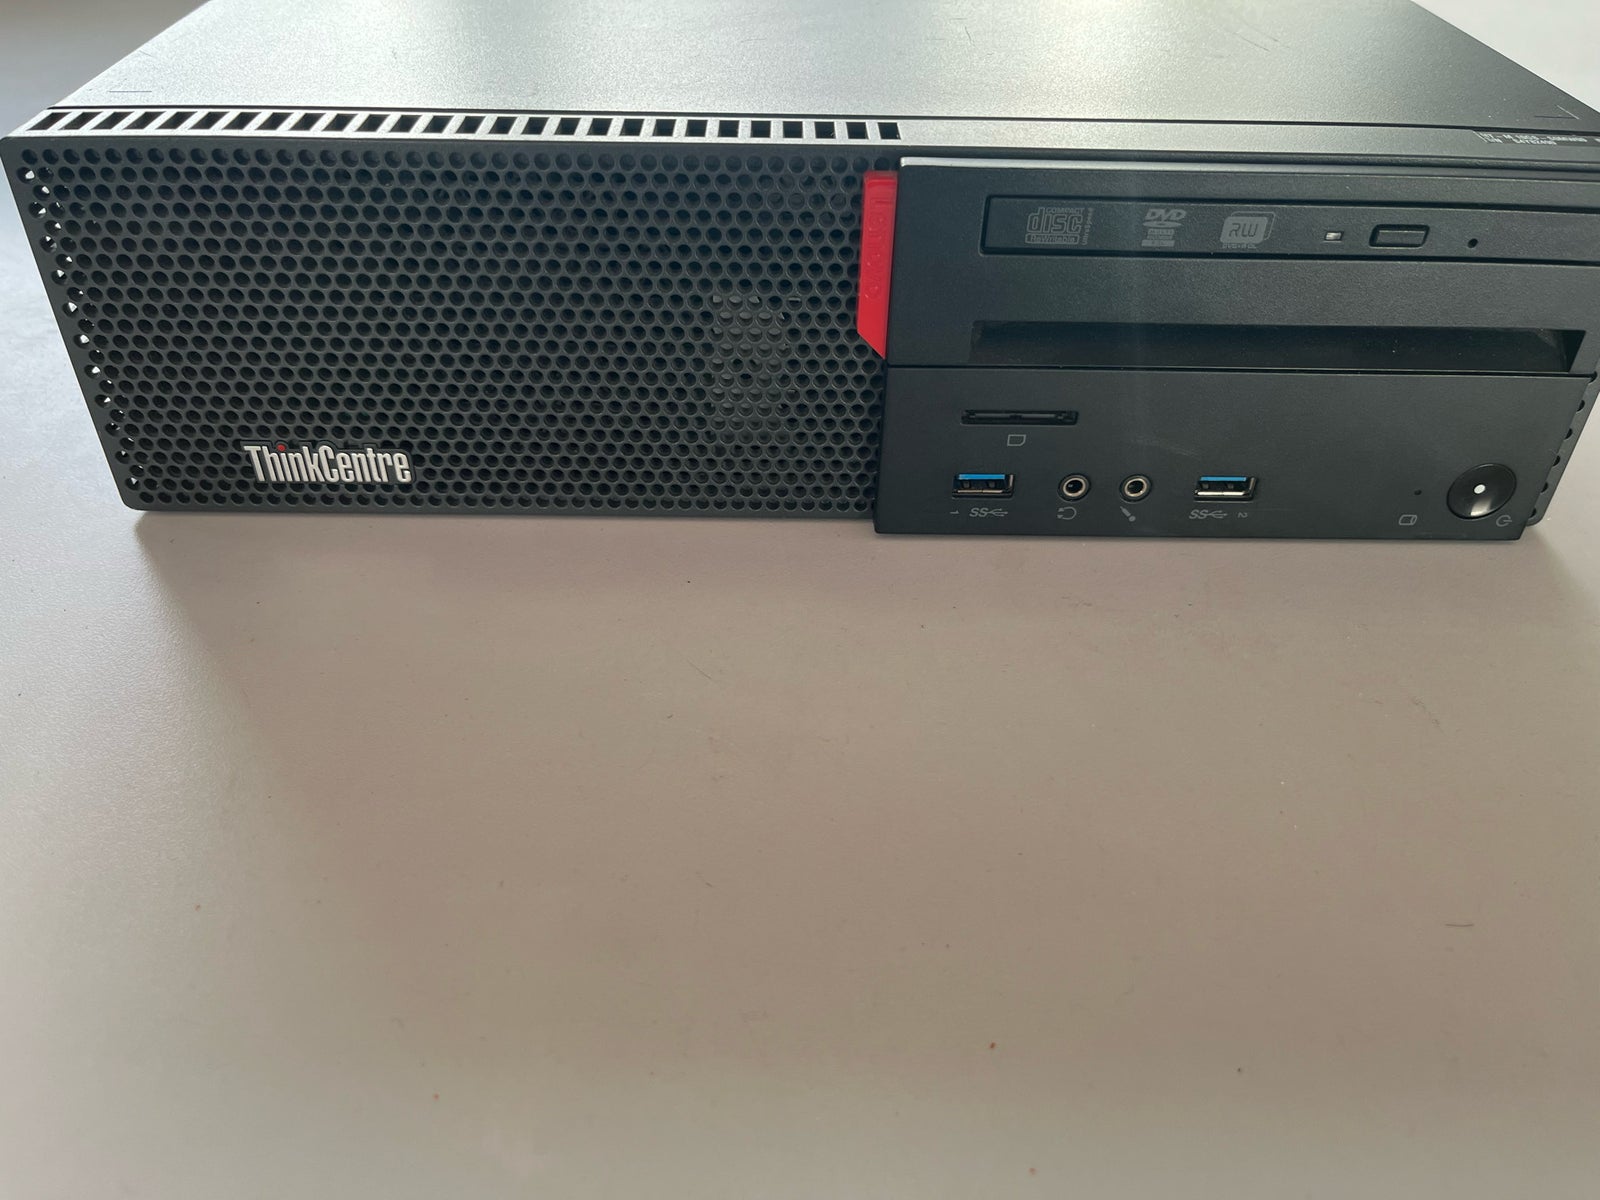 Lenovo, Thinkcentre stationær I5 - Ssd - 8 gb ddr4, I5 6400t